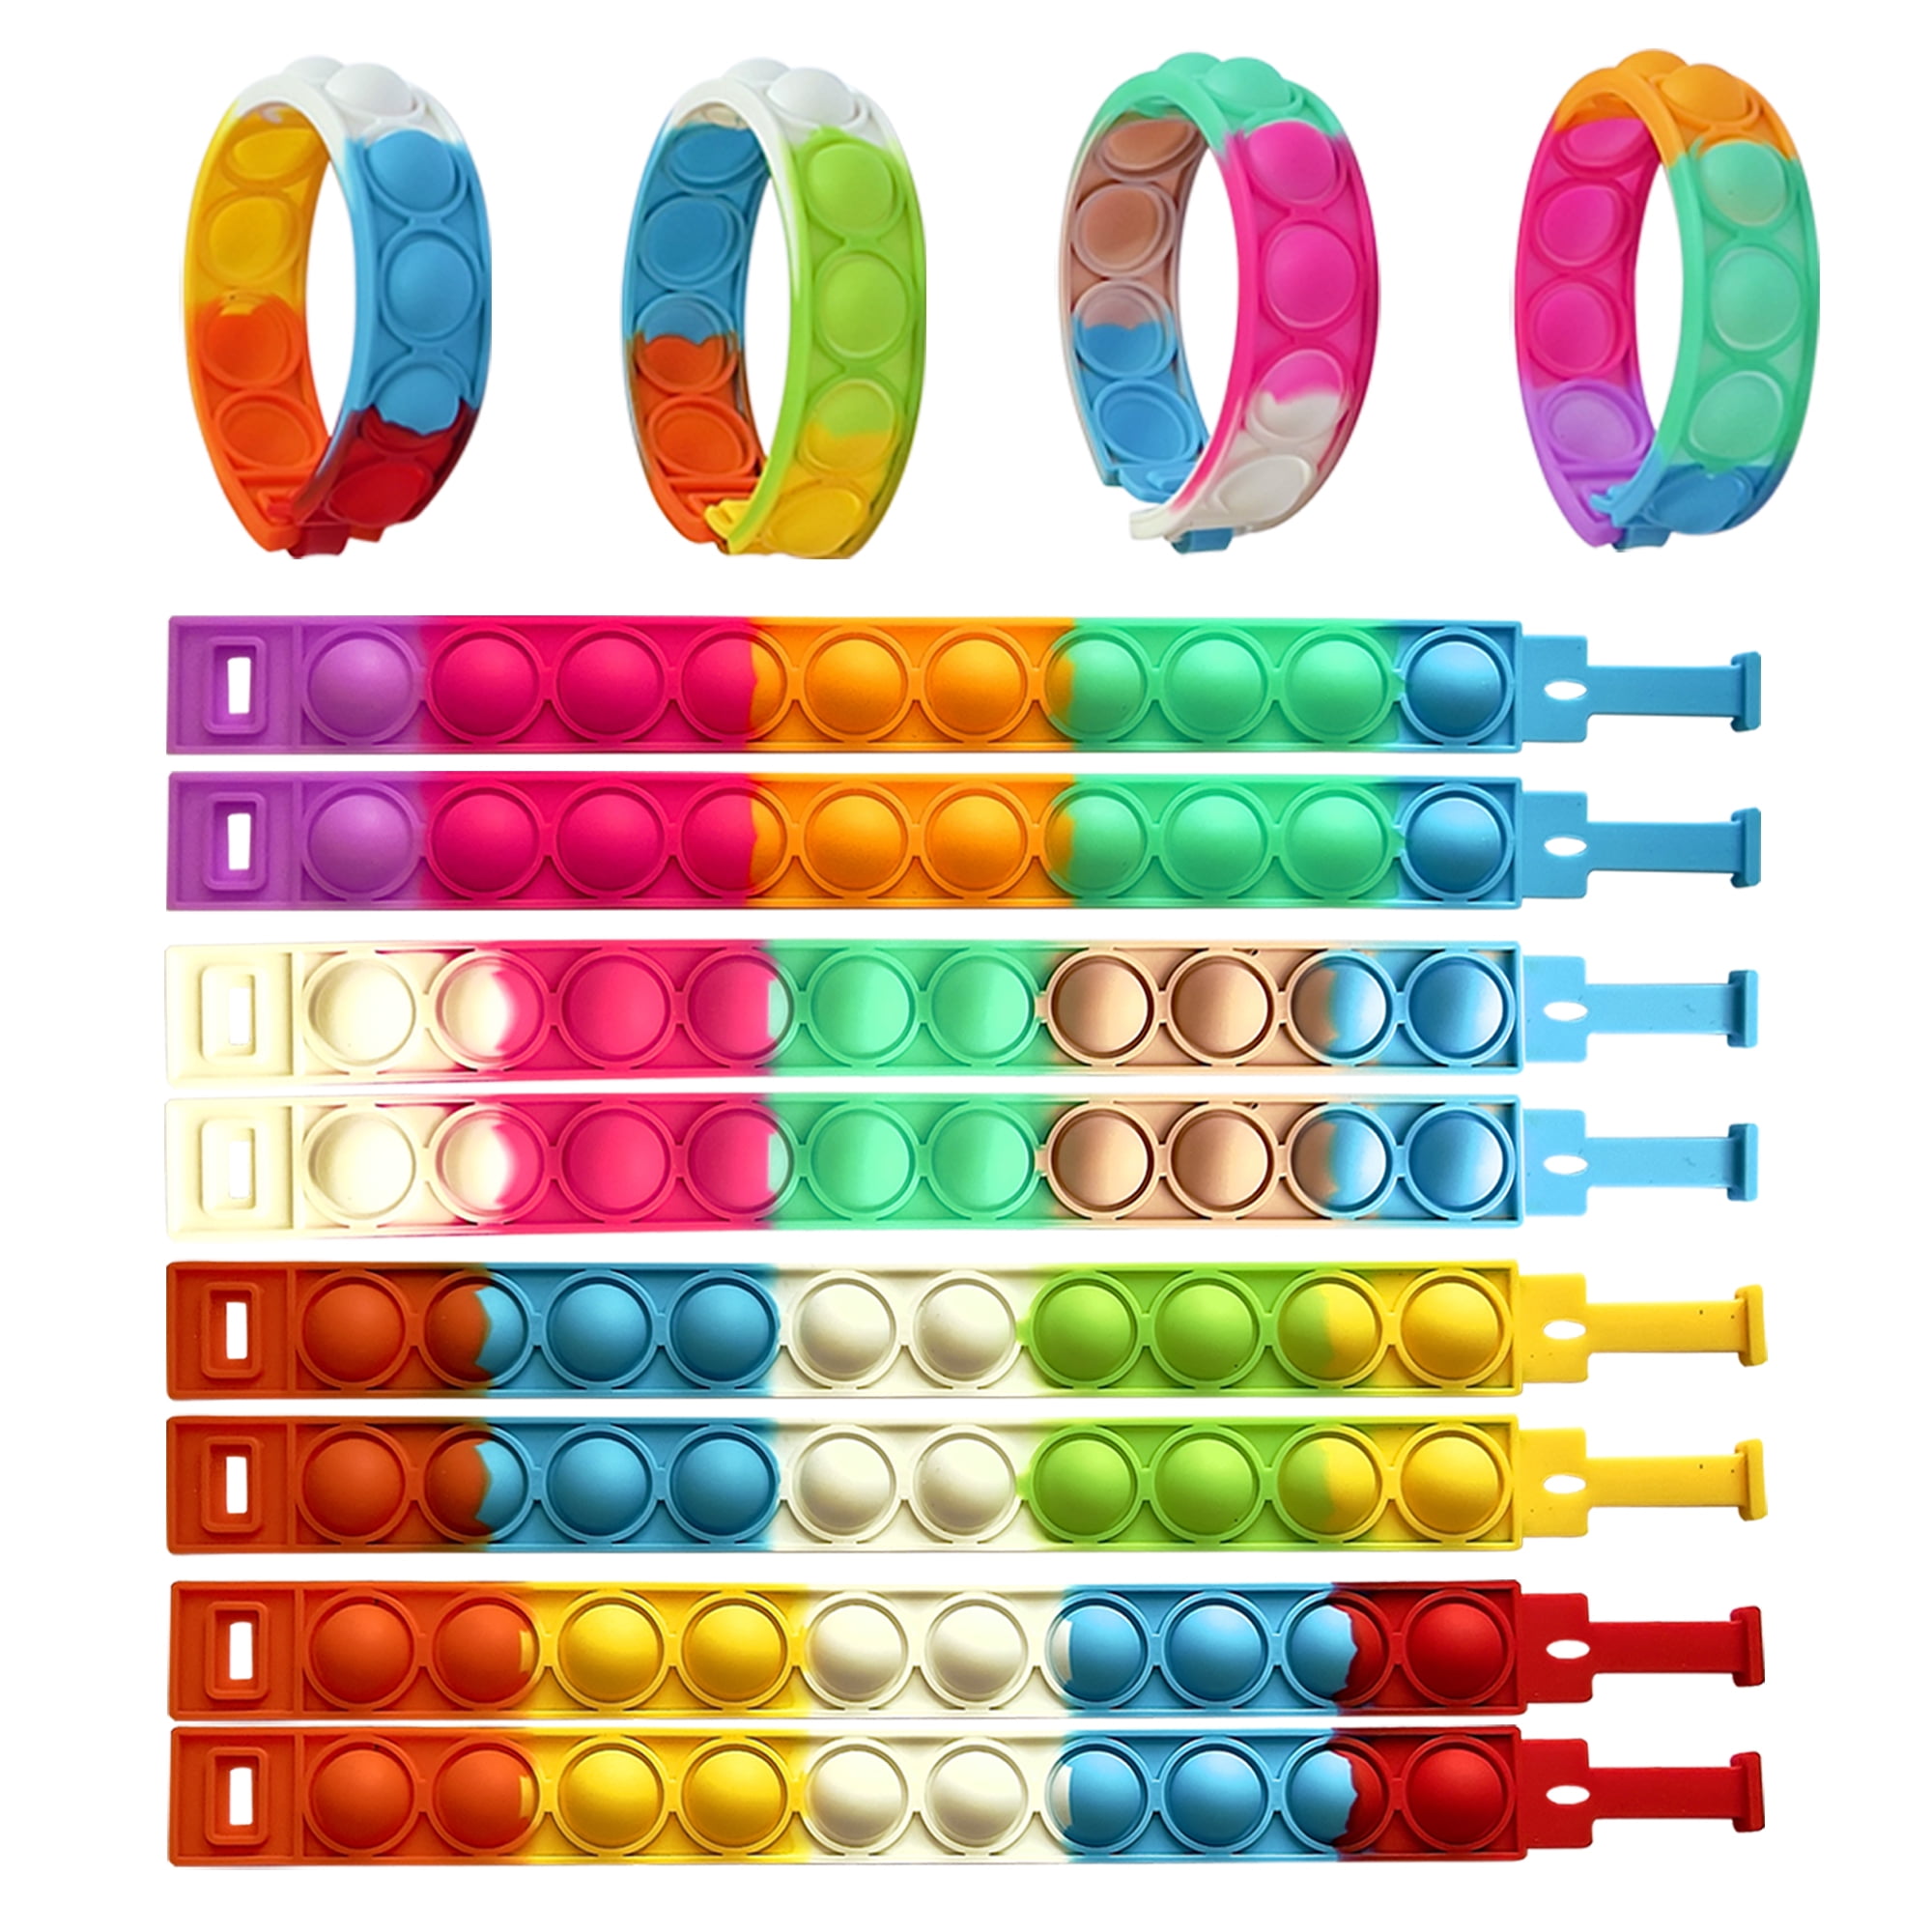 32 Pcs Bracelets Glow in The Dark Pop It Fidget Toy, Rainbow Party Favors, Anti-Anxiety Stress Relief Wristband Set, Push Bubbles Sensory Autistic